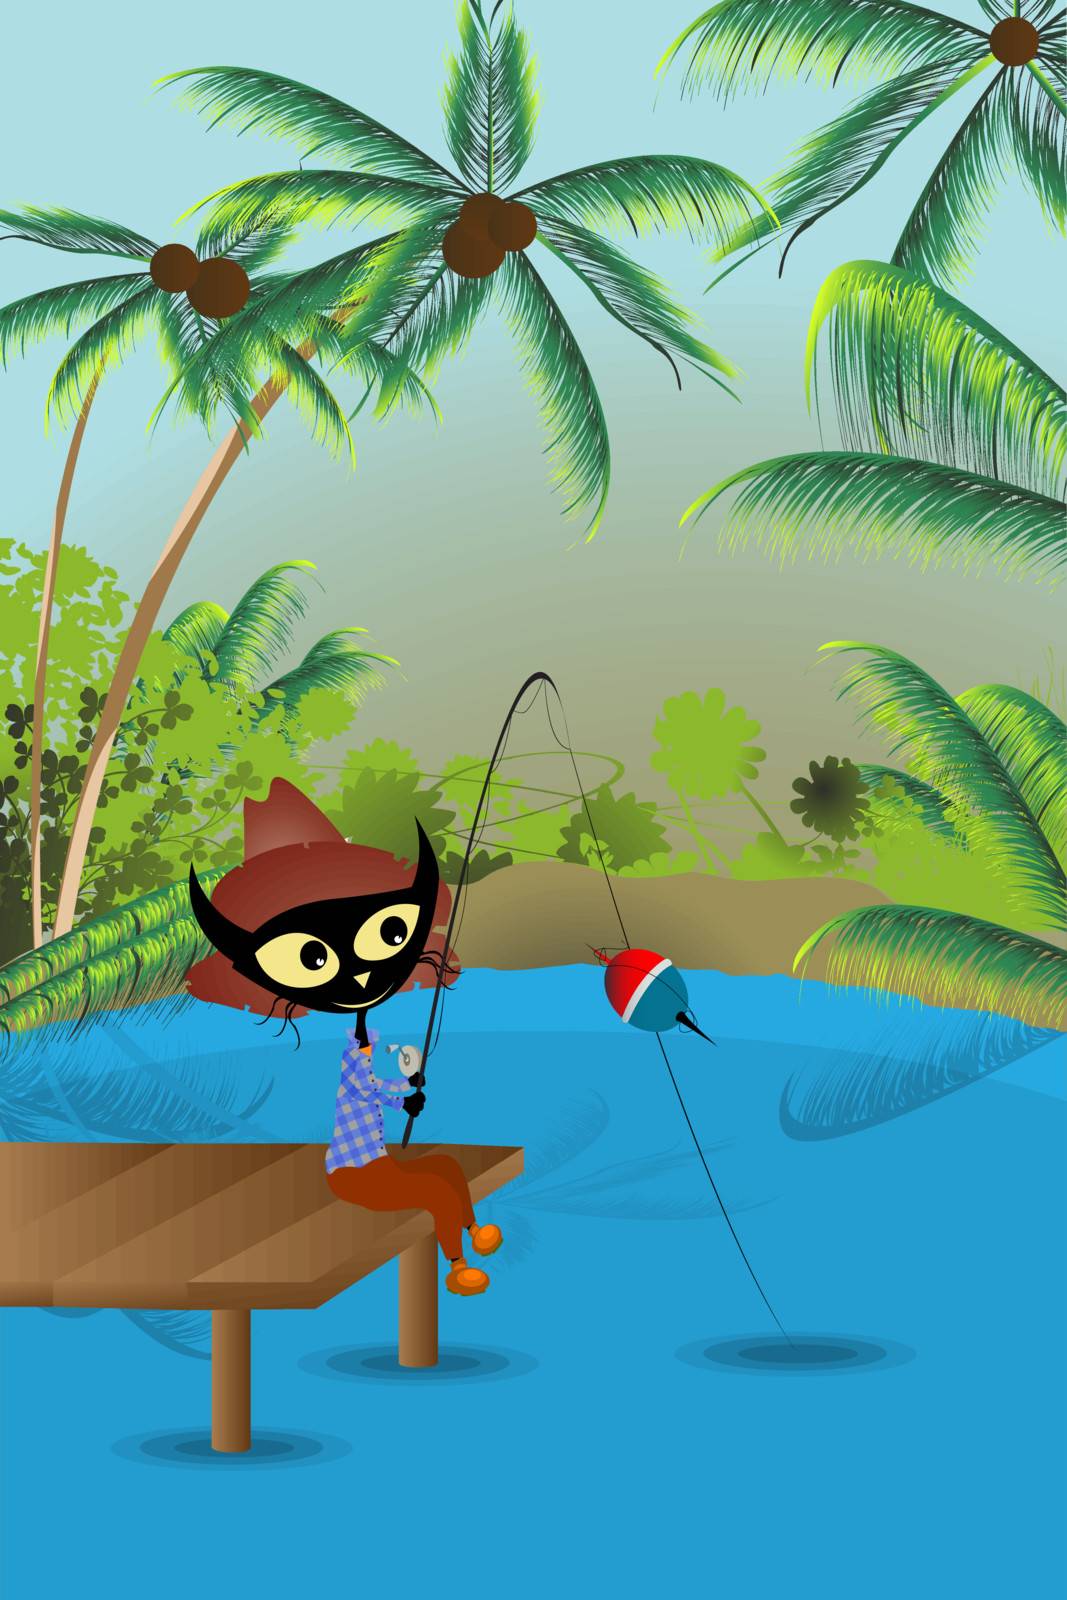 Cool cat fishing in a lake, fantasy illustration